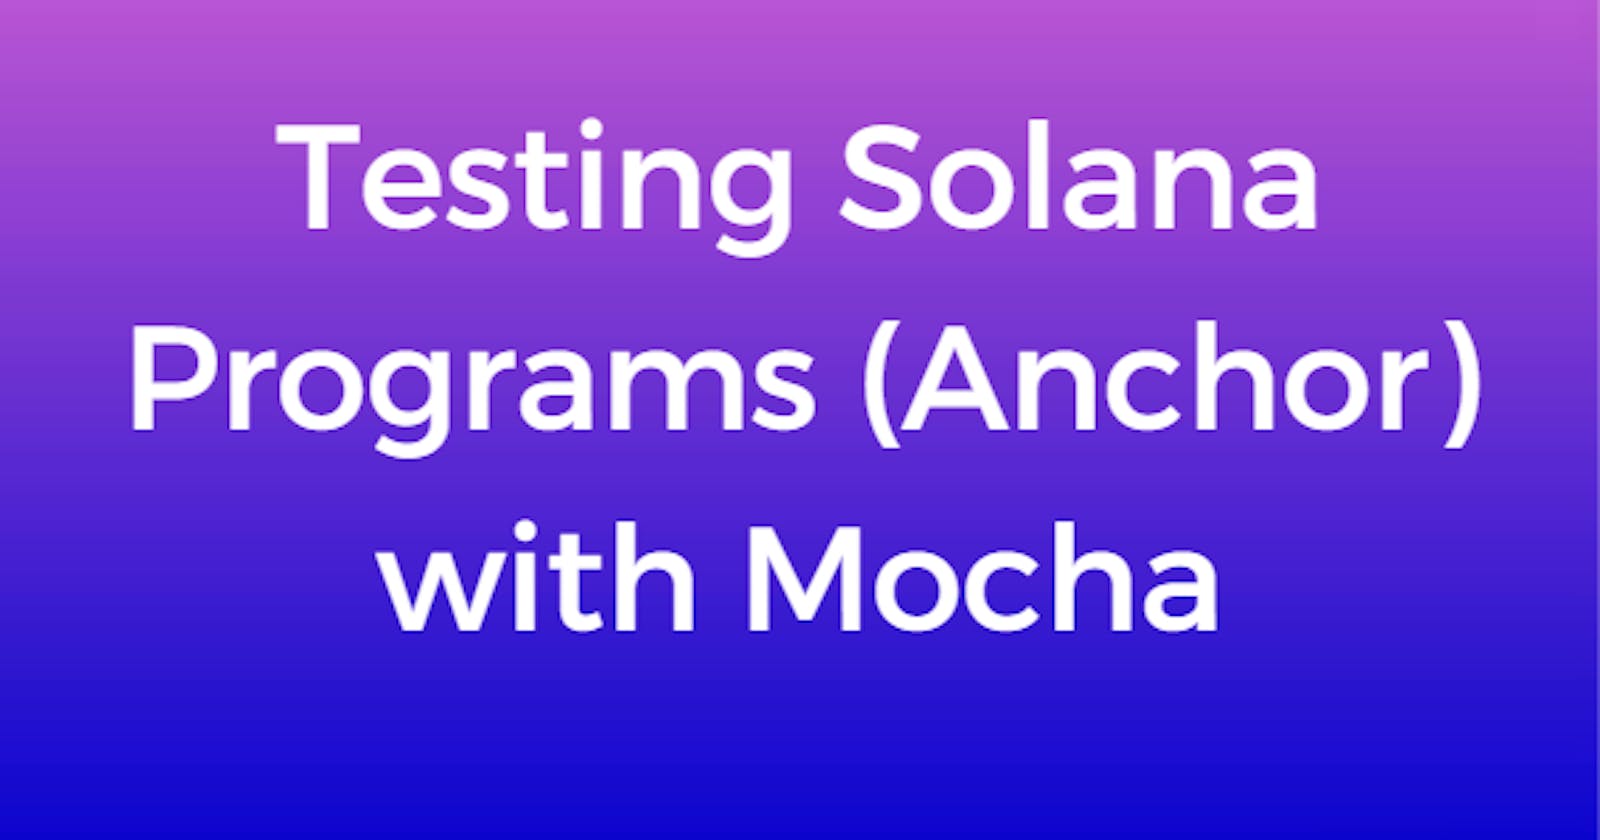 Testing Solana Programs (Anchor) with Mocha